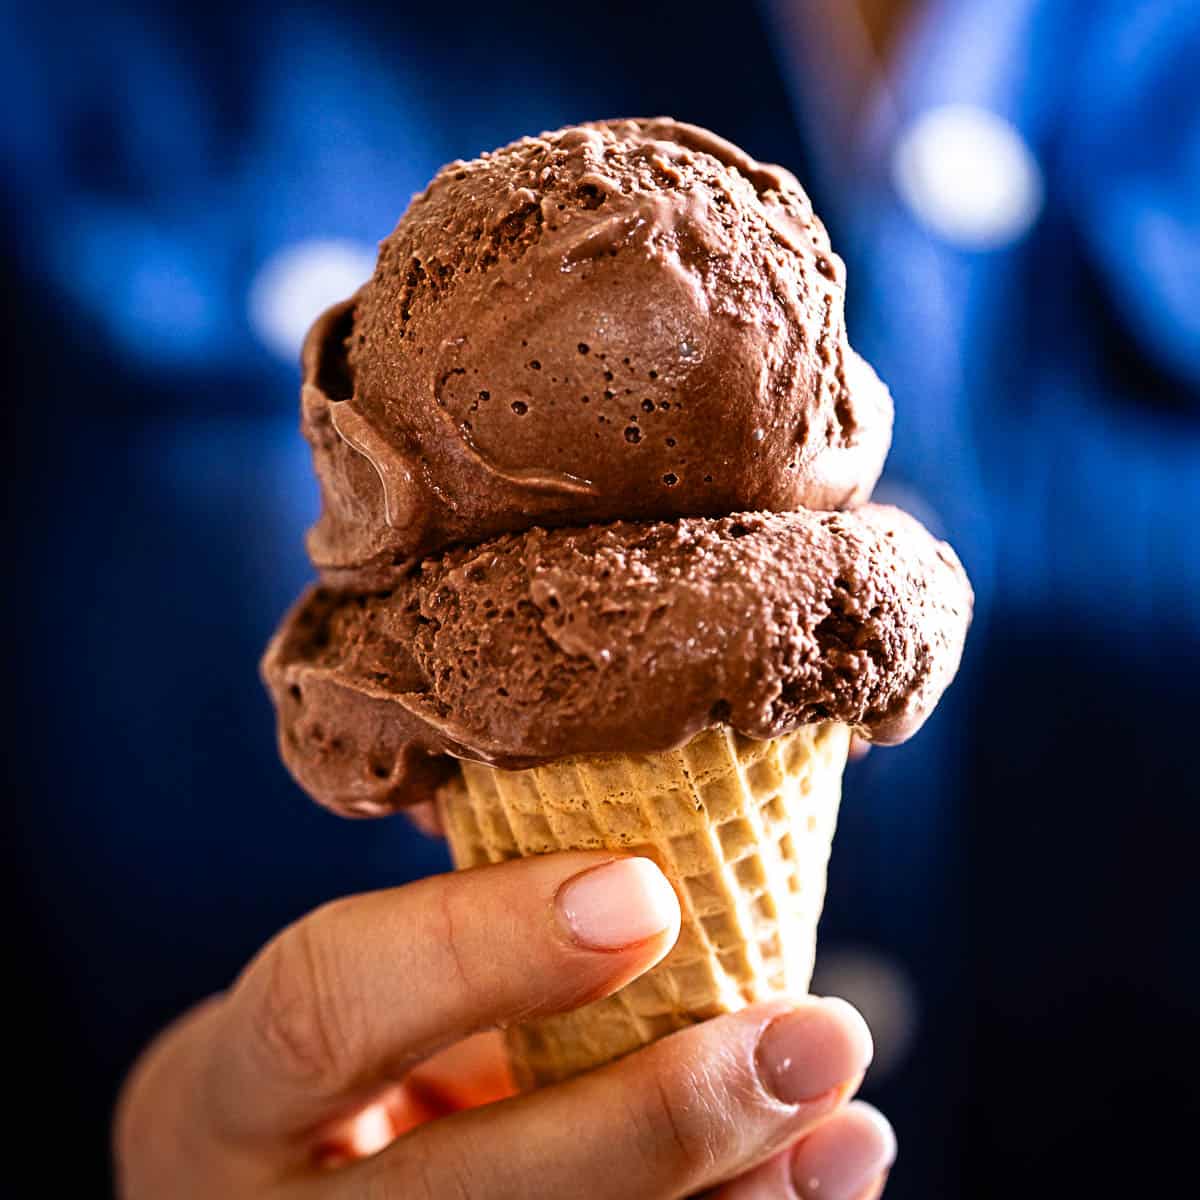 Chocolate Ice Cream